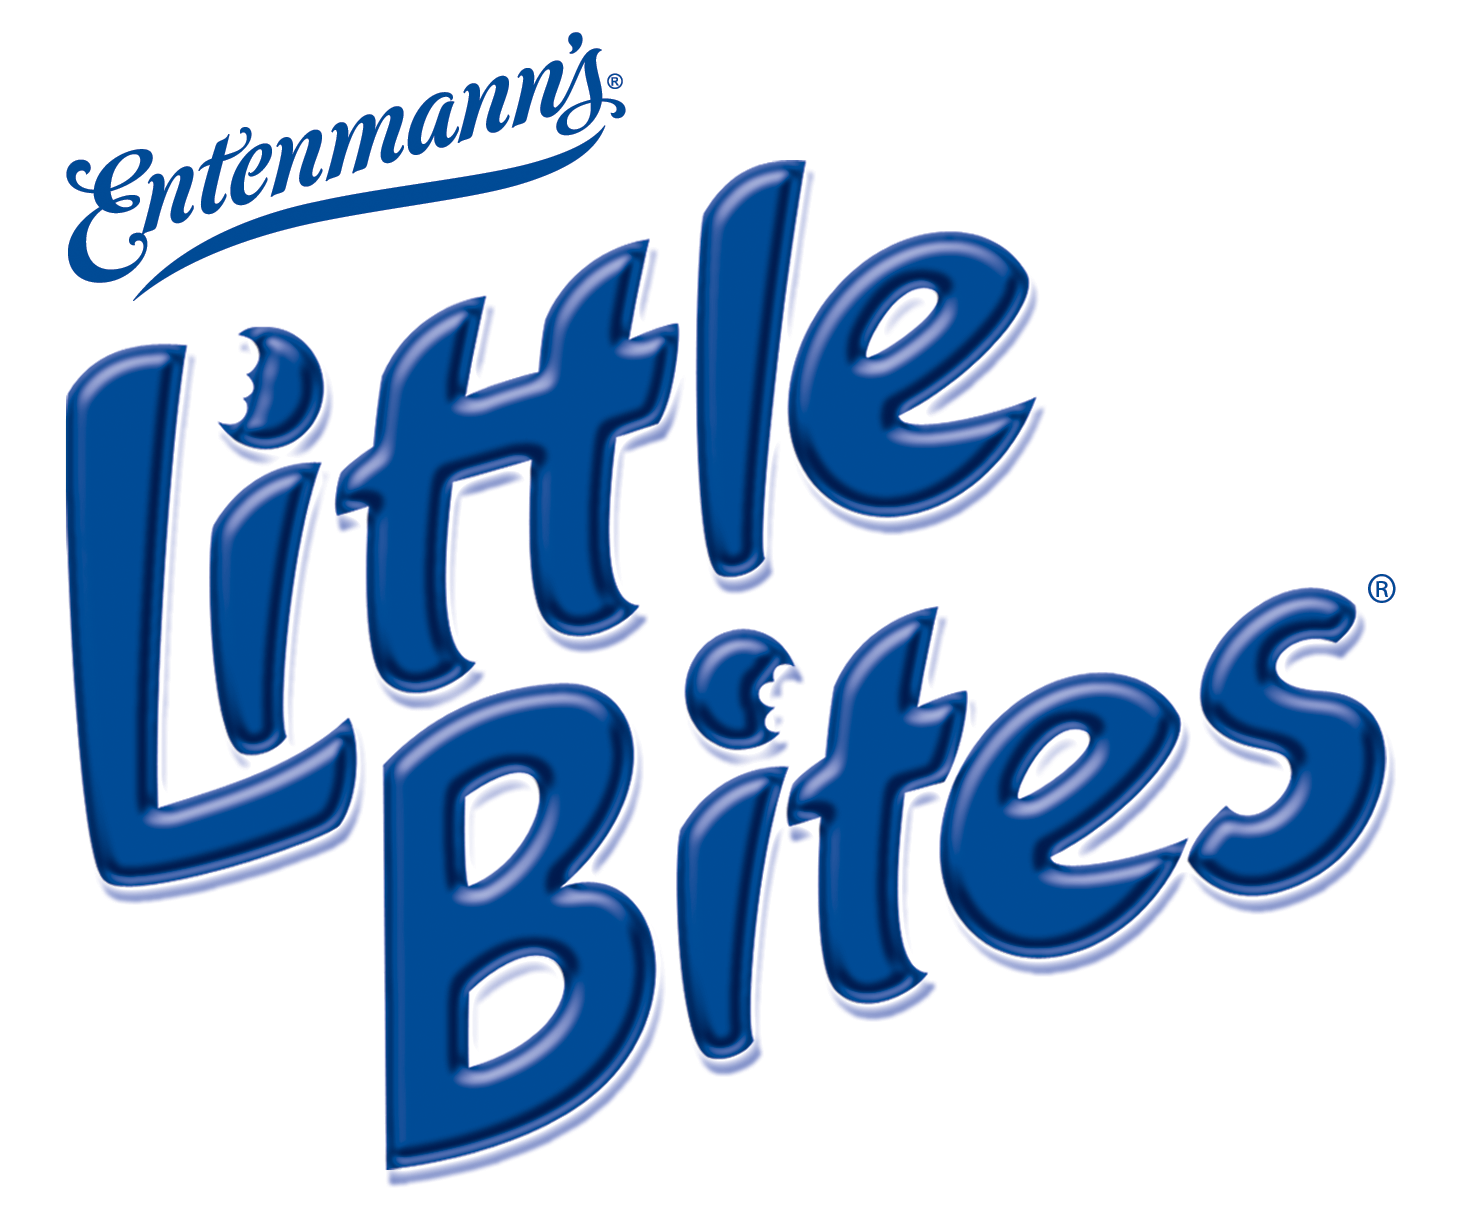 Halloween with Entenmann's Little Bites